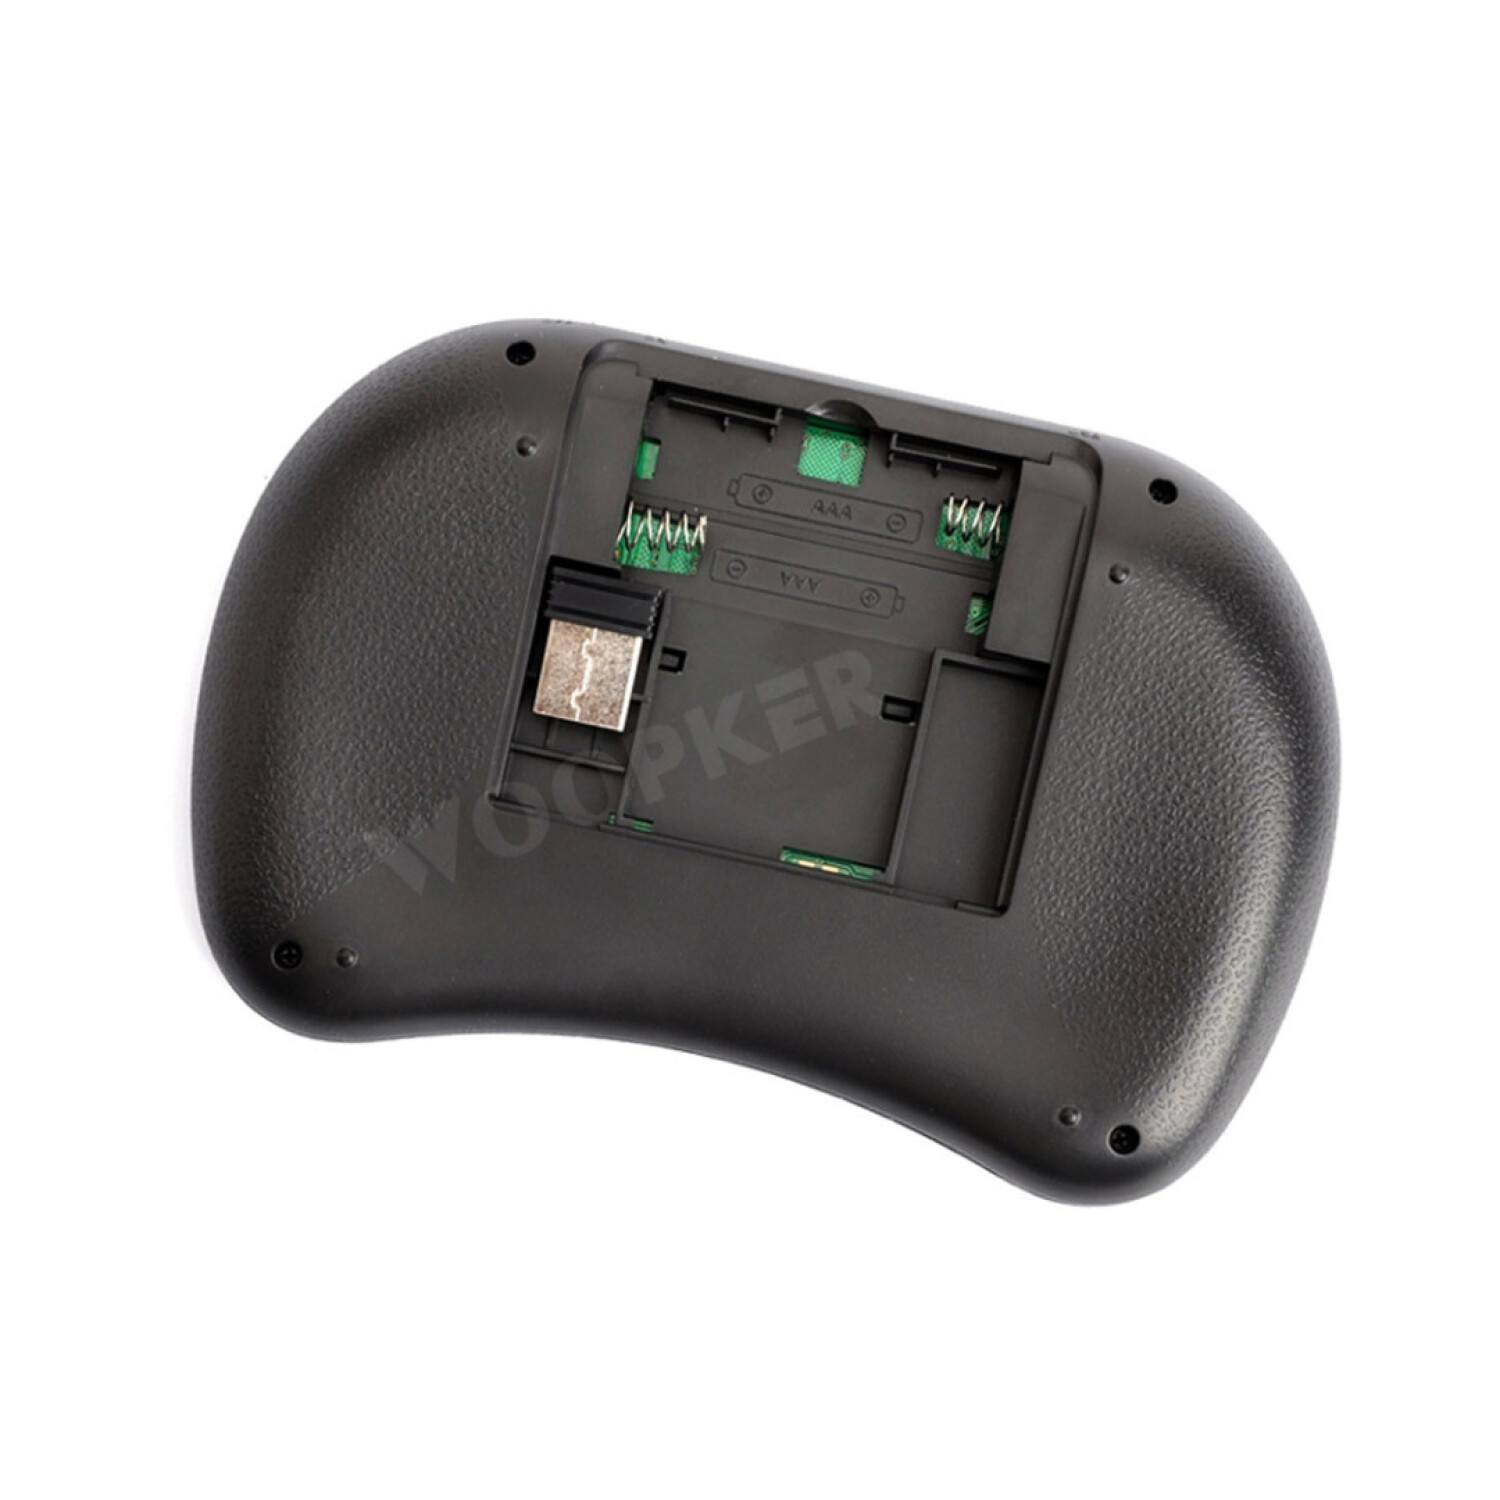 Teclado Mini inalambrico touch pad en español WB 8020